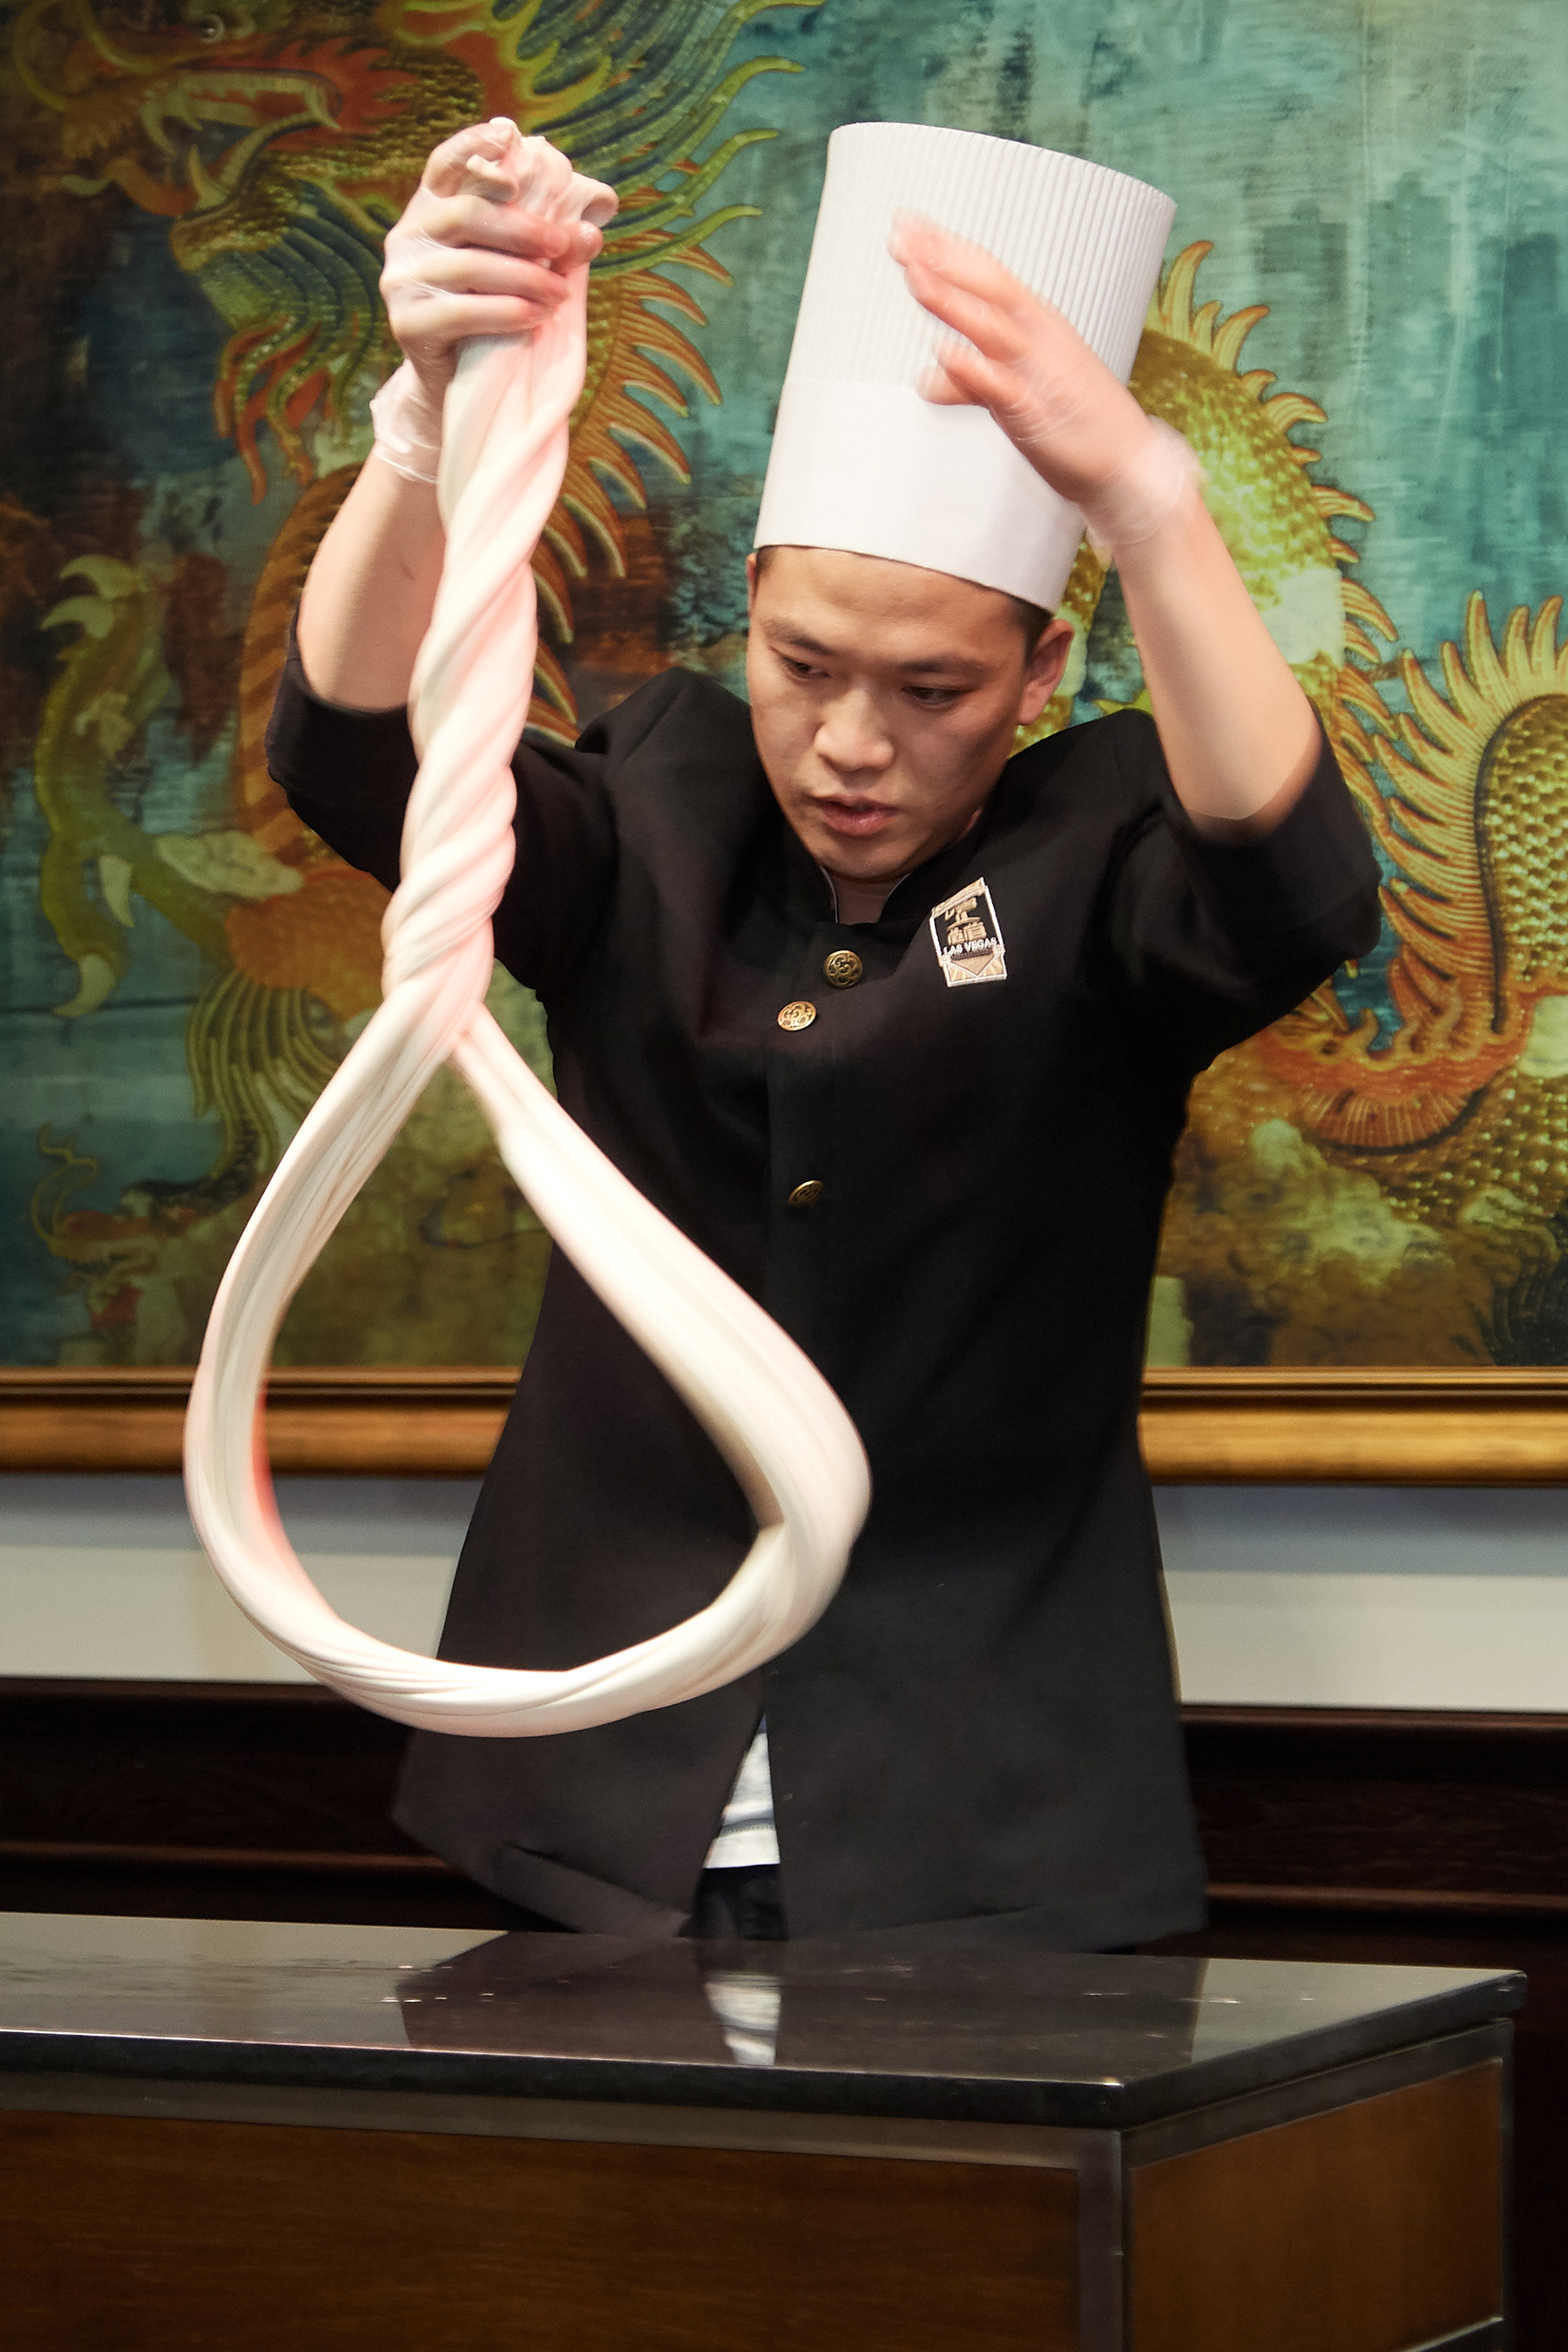 Noodle Pulling Performance at China Tang Las Vegas